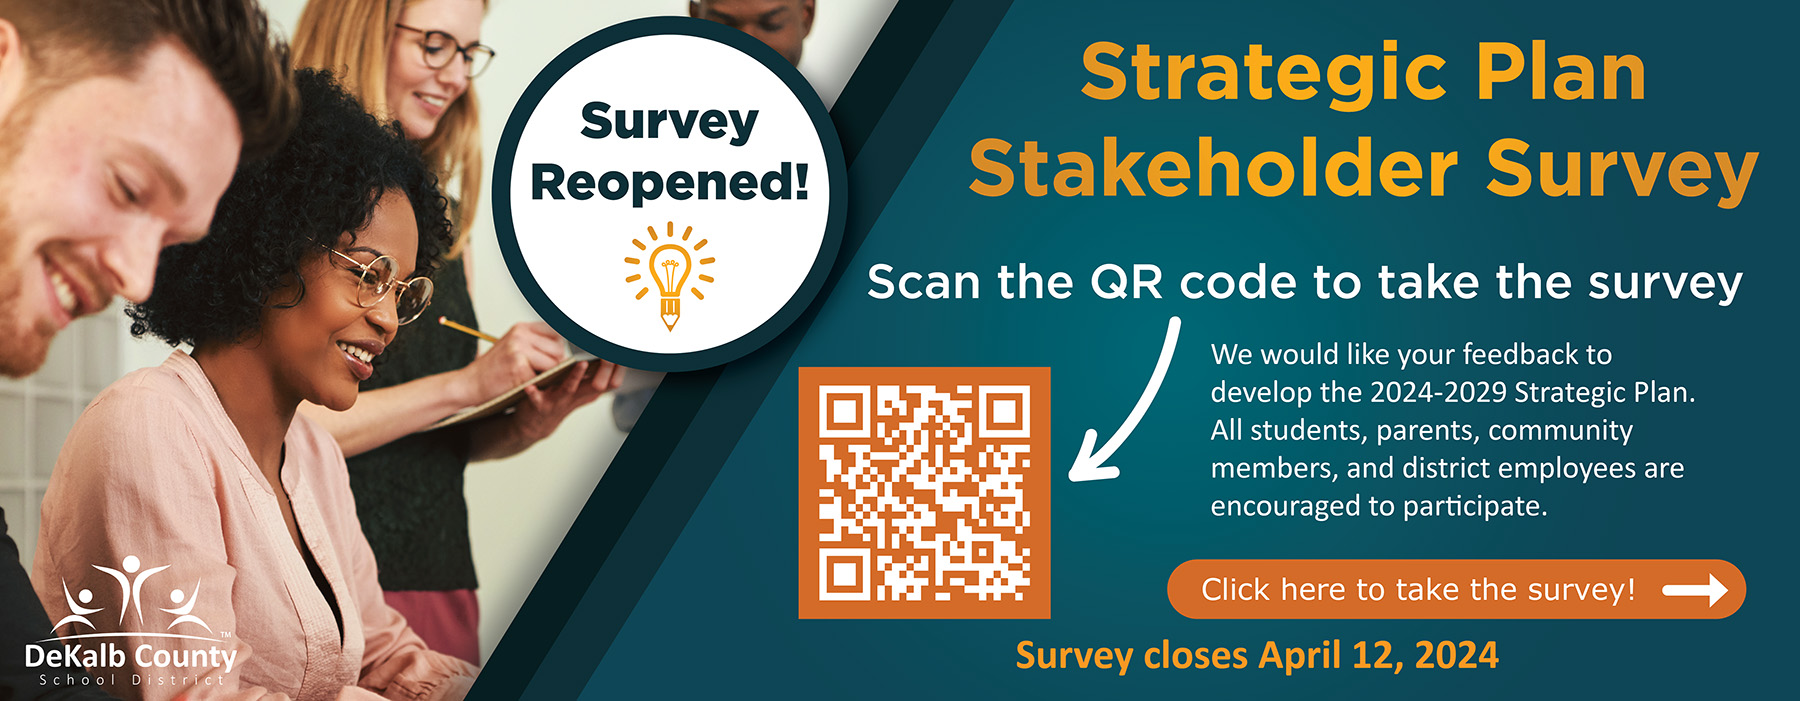 strategic plan stakeholder survey